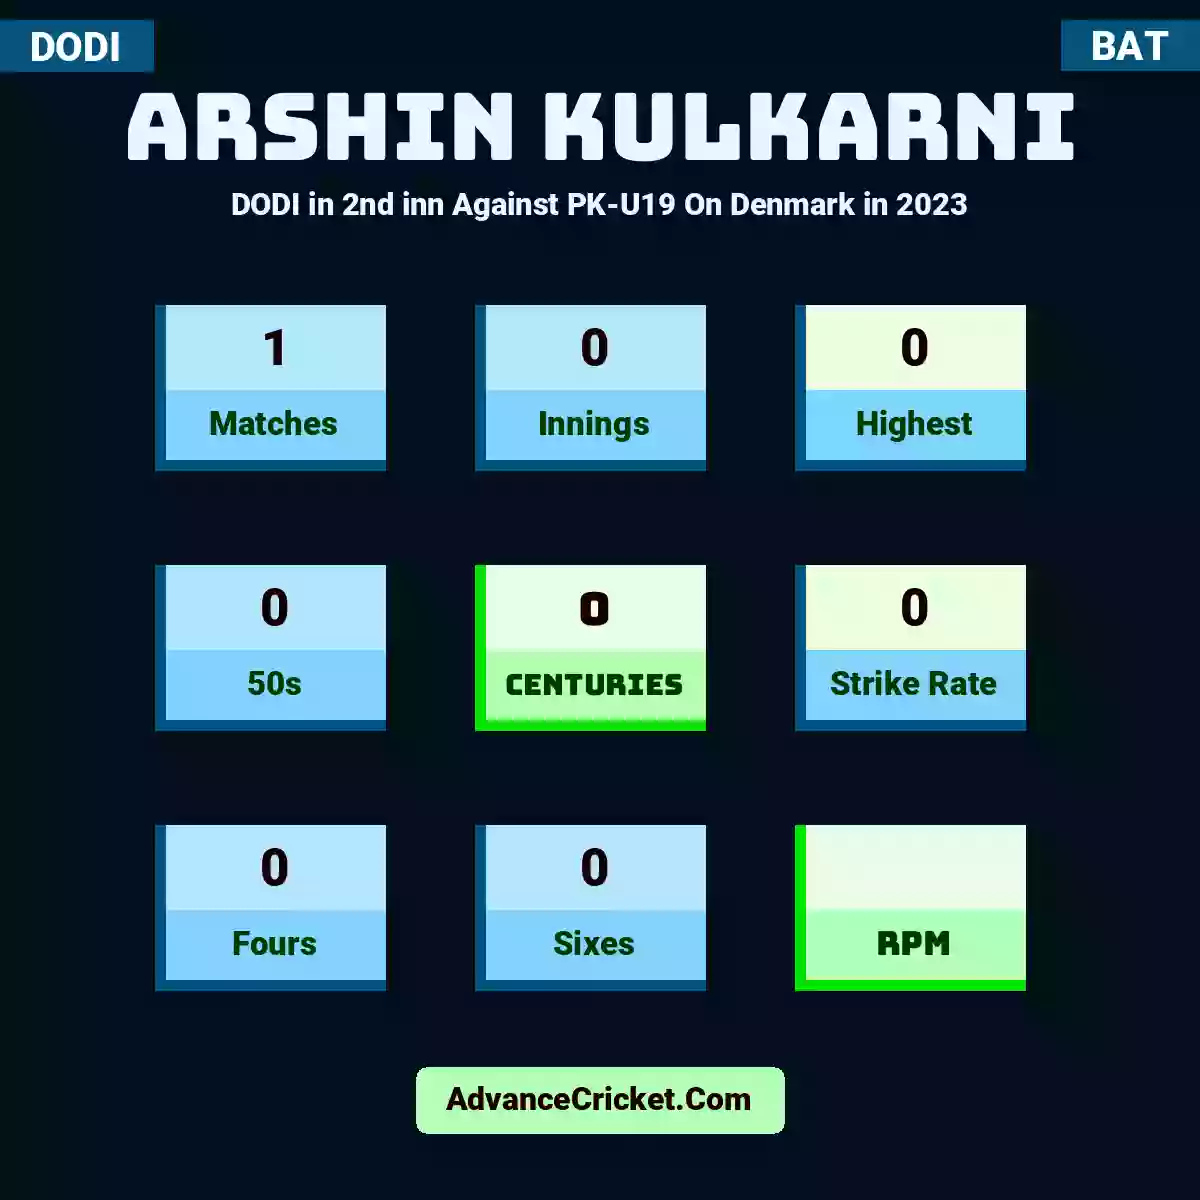 Arshin Kulkarni DODI  in 2nd inn Against PK-U19 On Denmark in 2023, Arshin Kulkarni played 1 matches, scored 0 runs as highest, 0 half-centuries, and 0 centuries, with a strike rate of 0. A.Kulkarni hit 0 fours and 0 sixes.